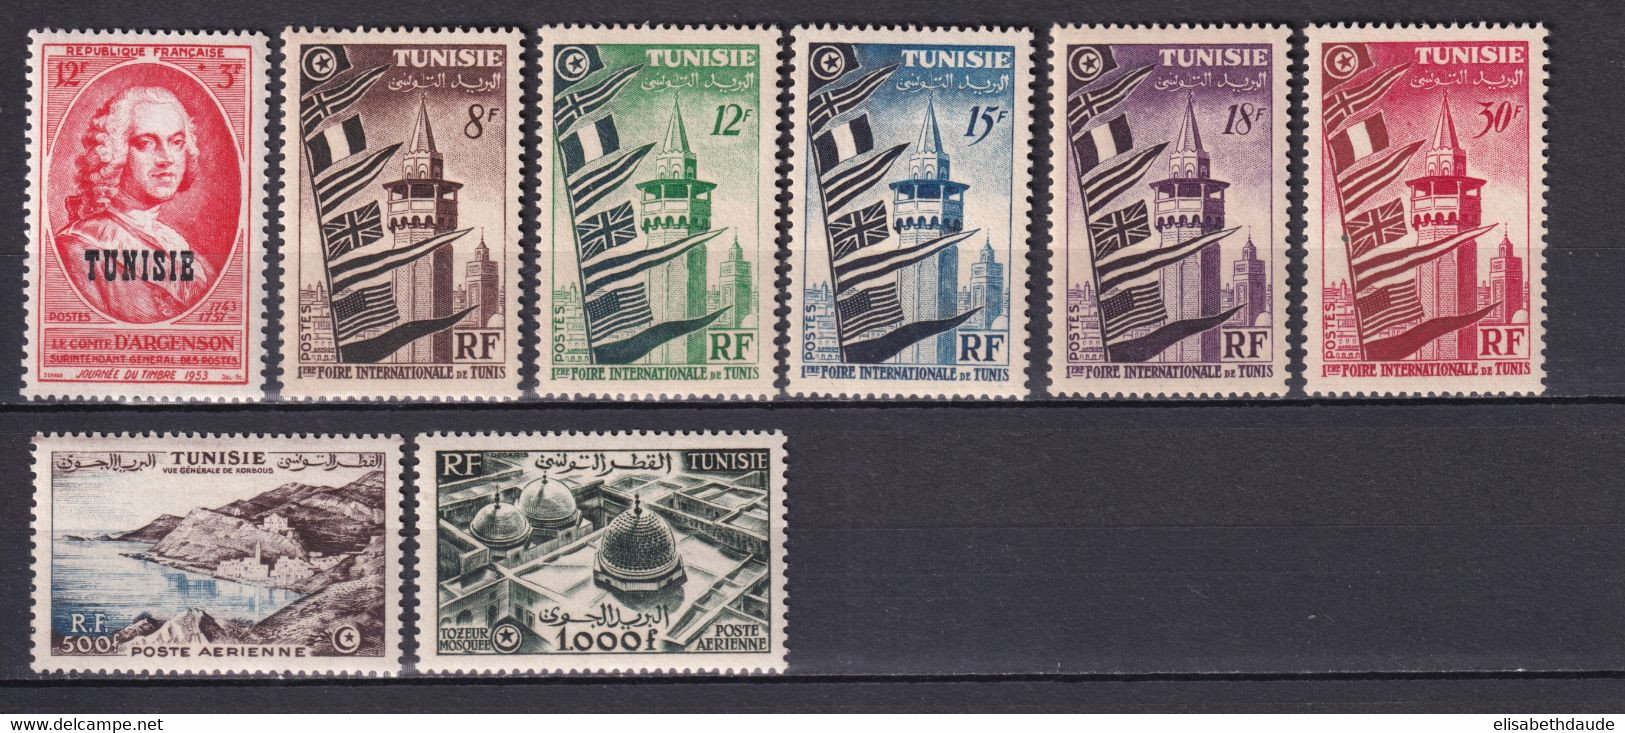 TUNISIE - 1953 - ANNEE COMPLETE AVEC POSTE AERIENNE - YVERT N° 359/364 +A18/19 * MLH - COTE = 111 EUR. - Nuovi